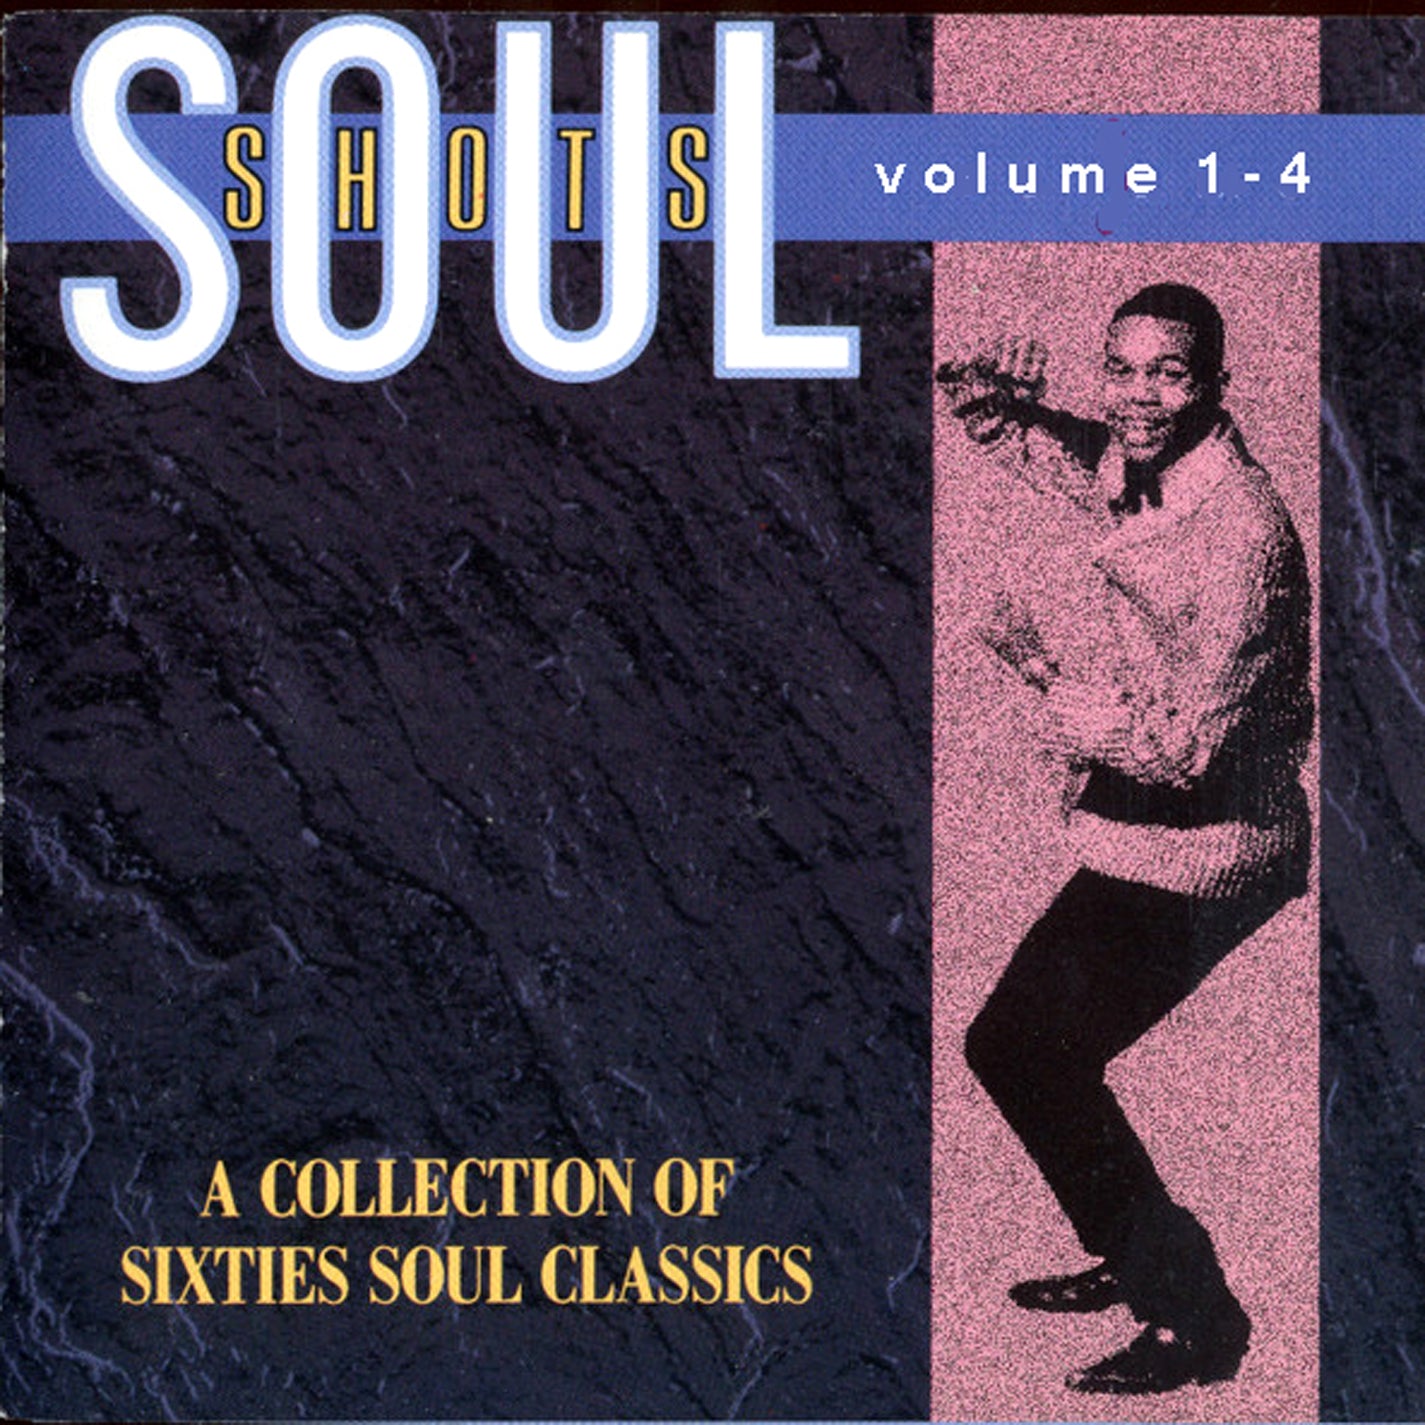 SOUL SHOTS - A COLLECTION OF 60'S SOUL CLASSICS BOXSET (CD LP) c1960